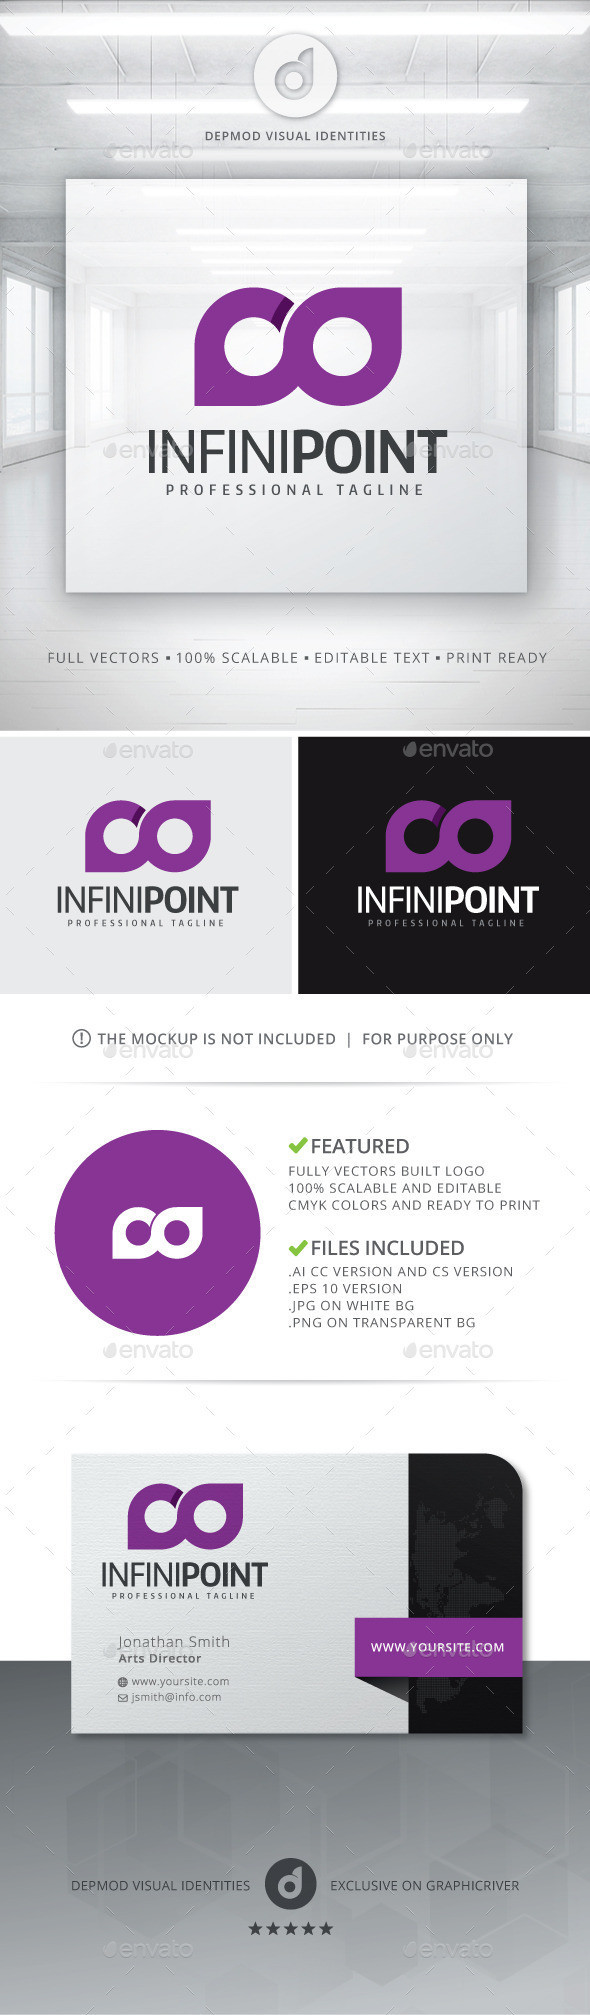 Infini point logo